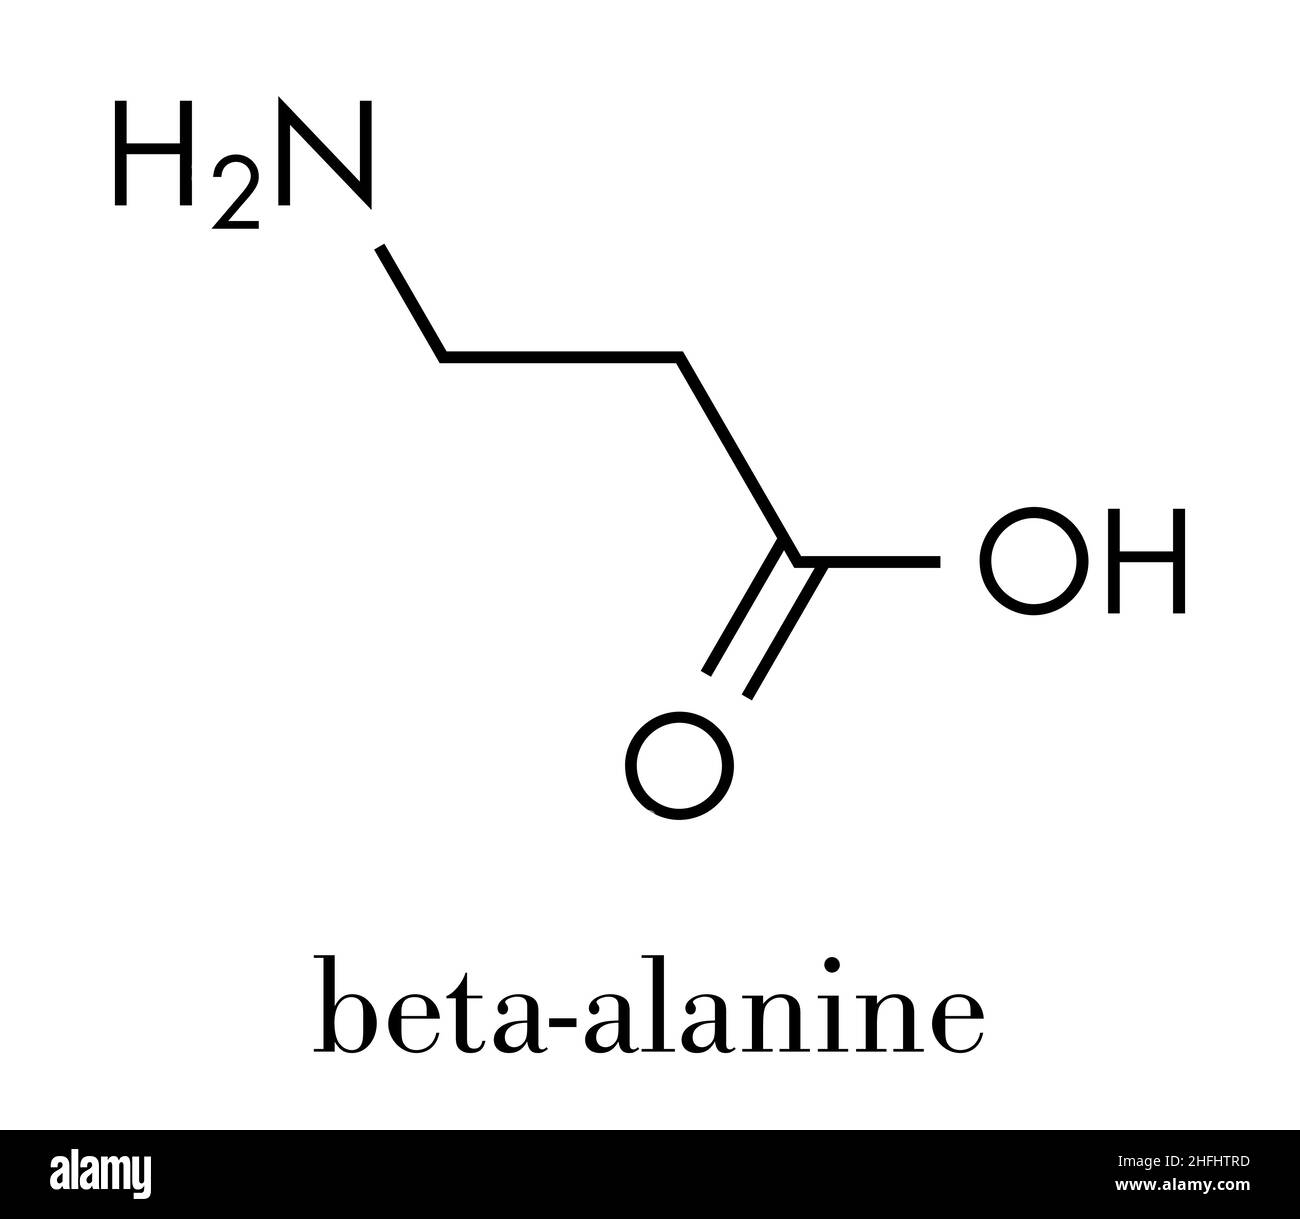 https://c8.alamy.com/comp/2HFHTRD/beta-alanine-molecule-naturally-occurring-beta-amino-acid-precursor-of-carnosine-athletes-often-use-beta-alanine-supplements-skeletal-formula-2HFHTRD.jpg